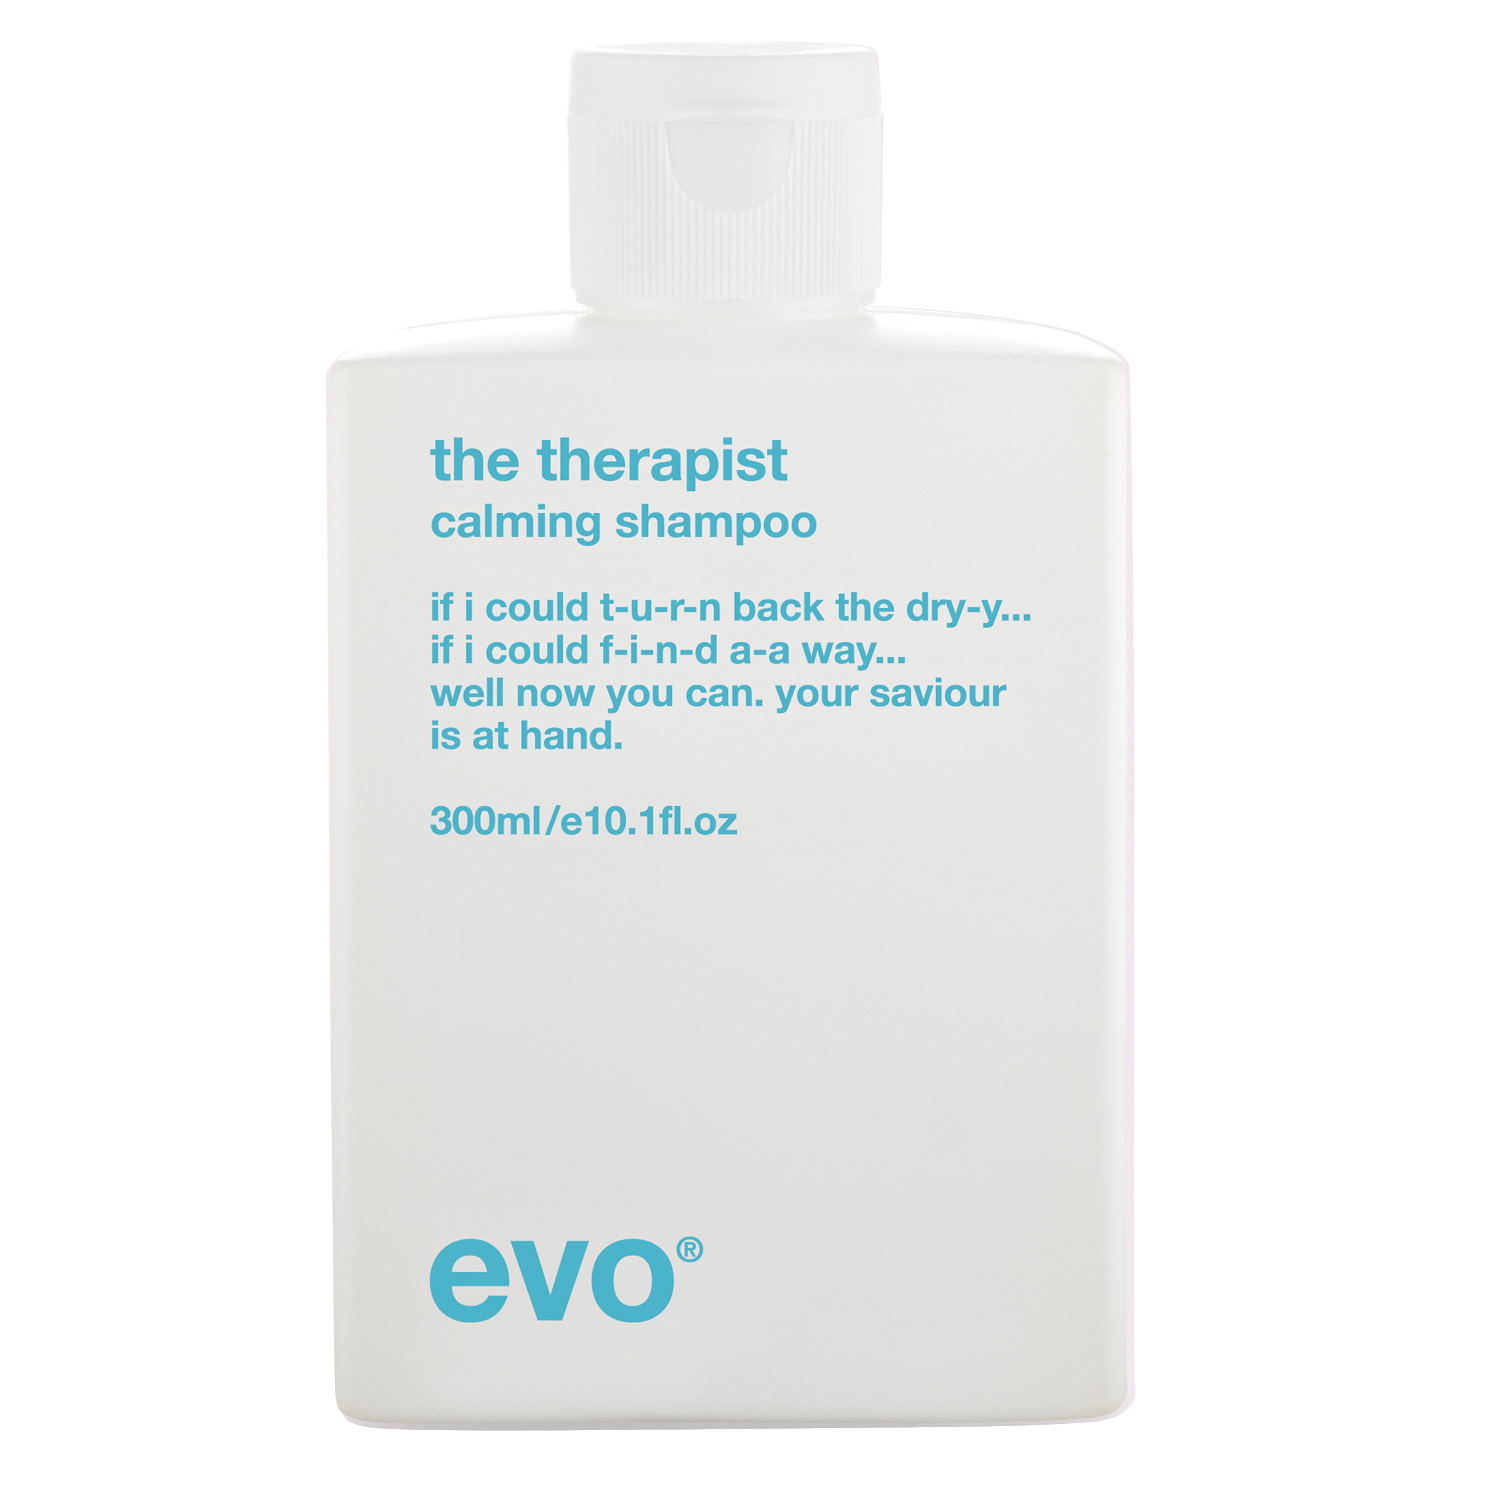 EVO Увлажняющий шампунь [терапевт] Calming Shampoo, 300 мл (EVO, the therapist) увлажняющий шампунь для волос the therapist calming shampoo 300мл